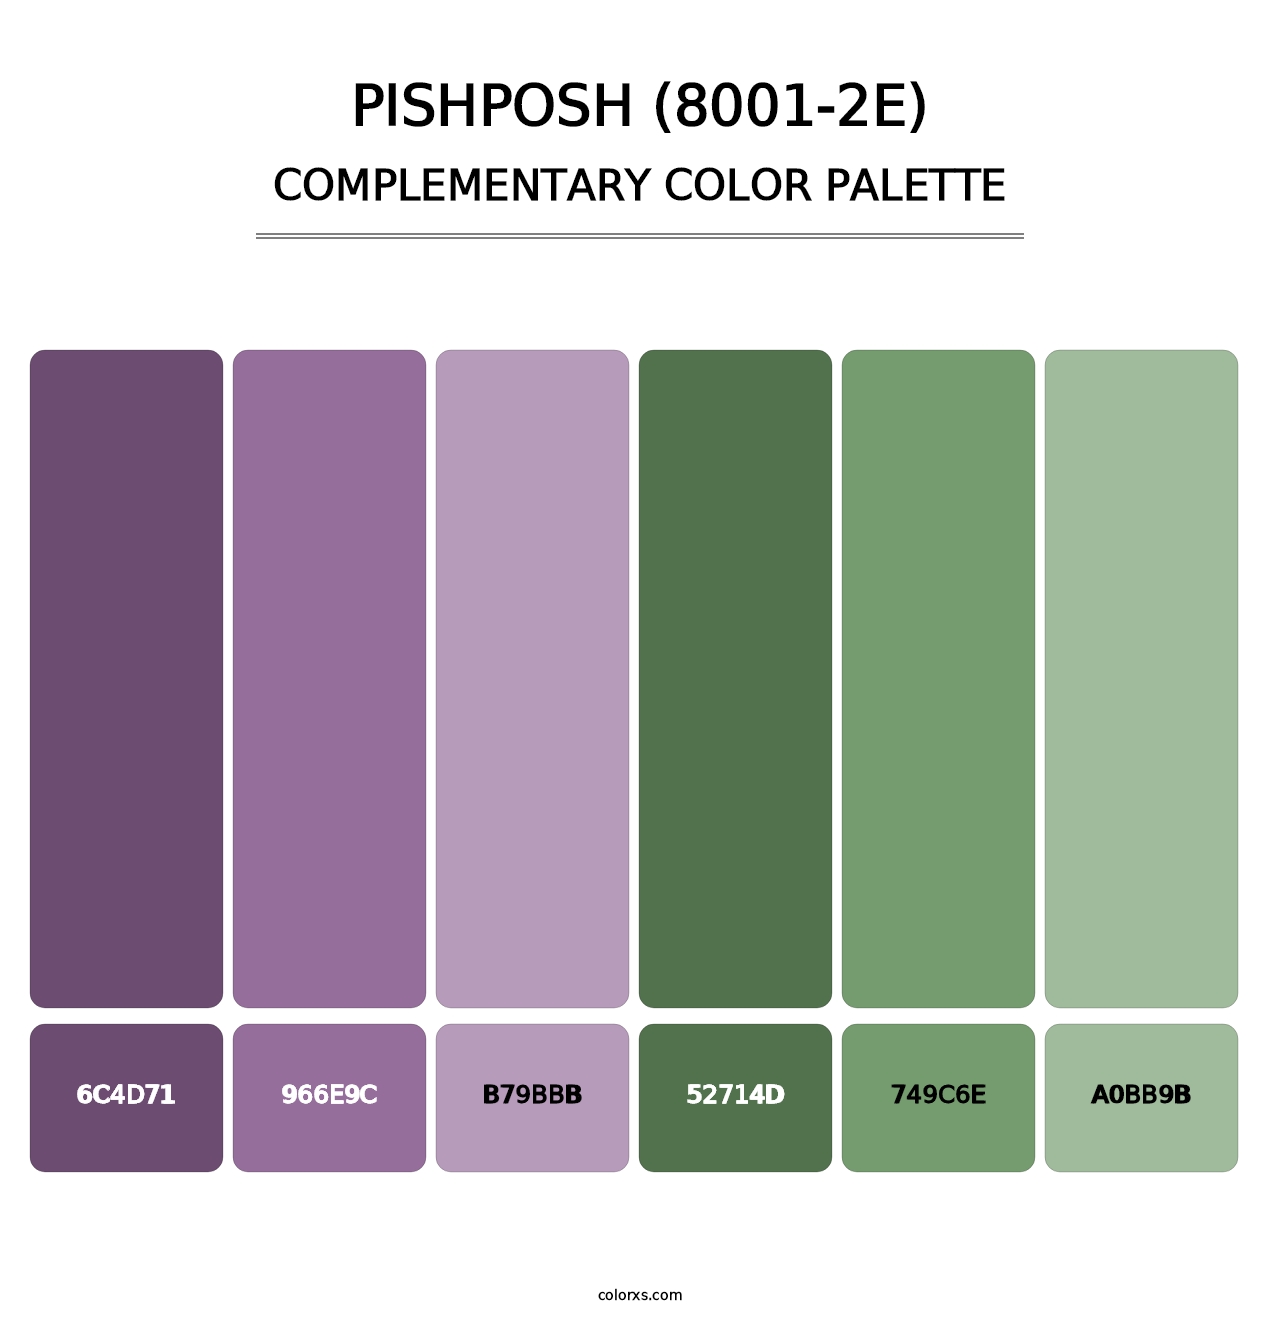 Pishposh (8001-2E) - Complementary Color Palette